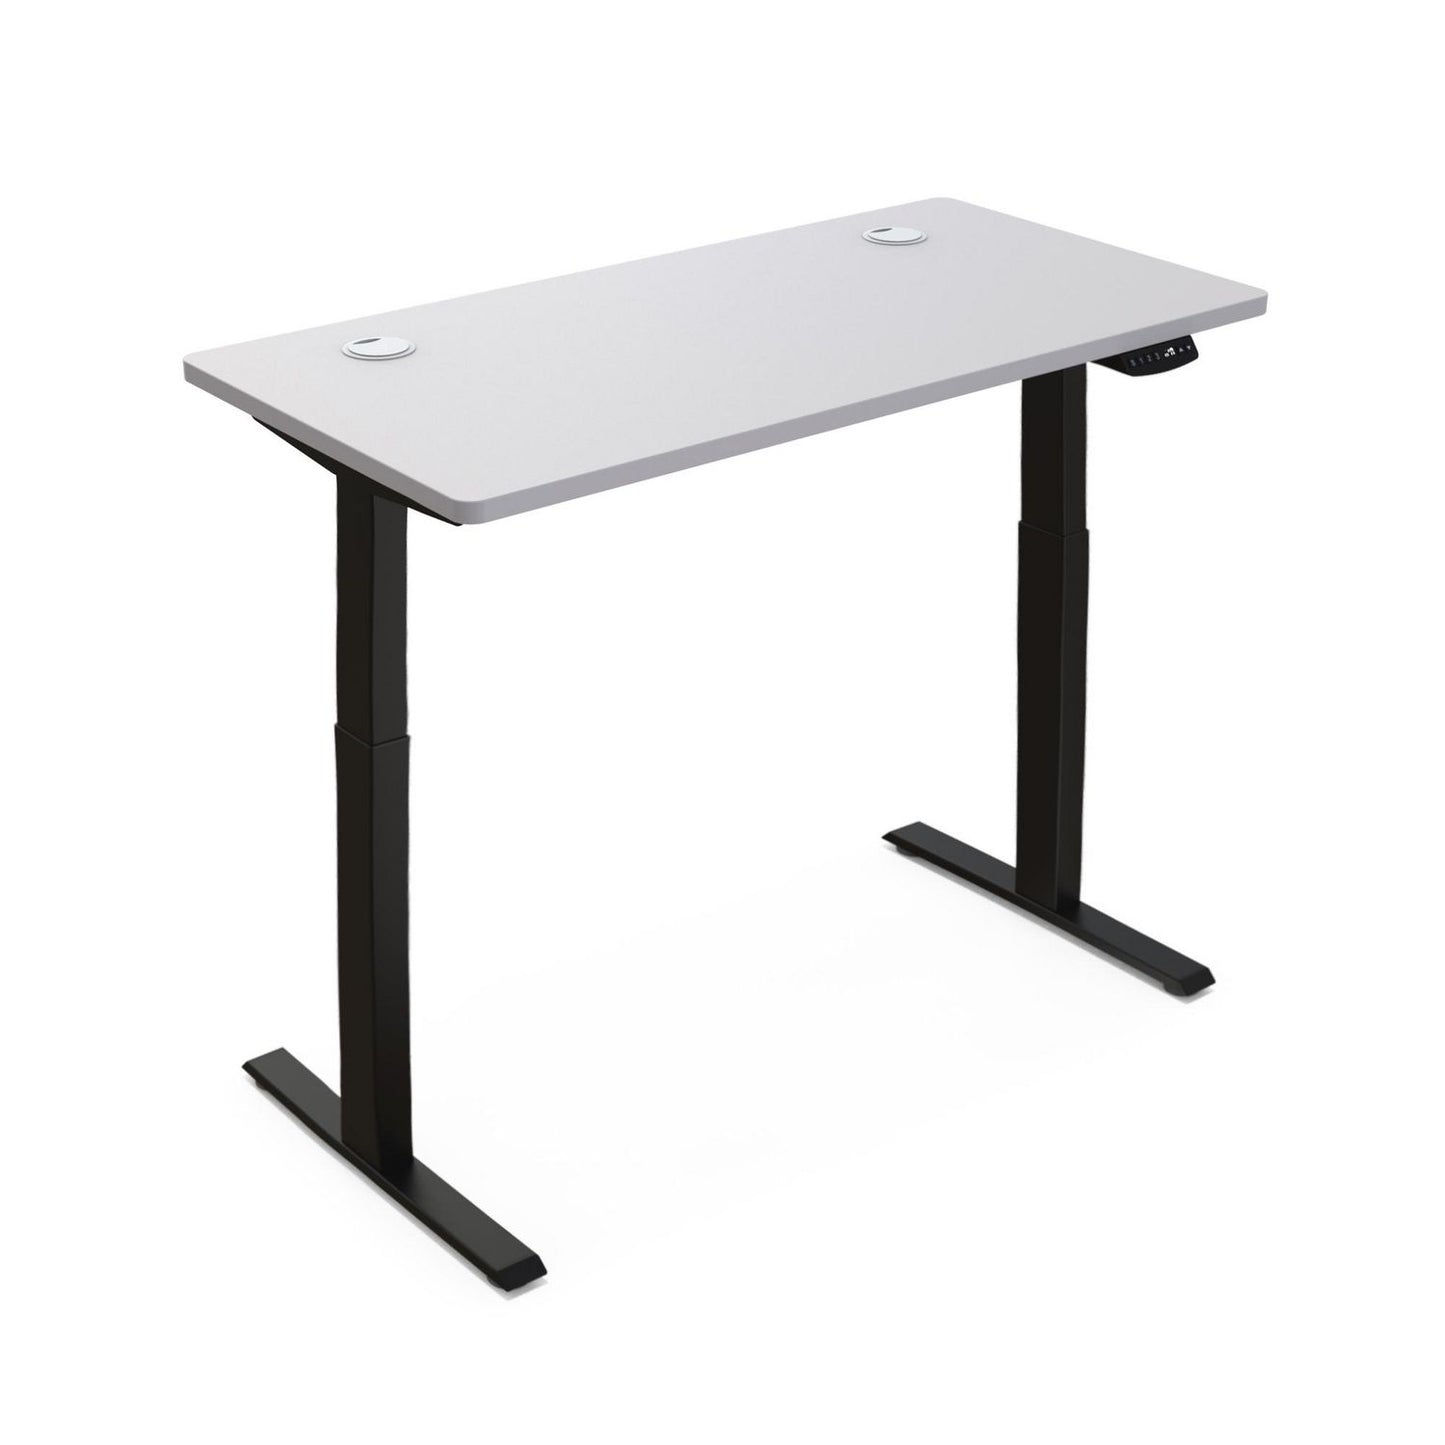 Hi5 Electric Height Adjustable Standing Desks with Rectangular Tabletop (120 x 60cm)